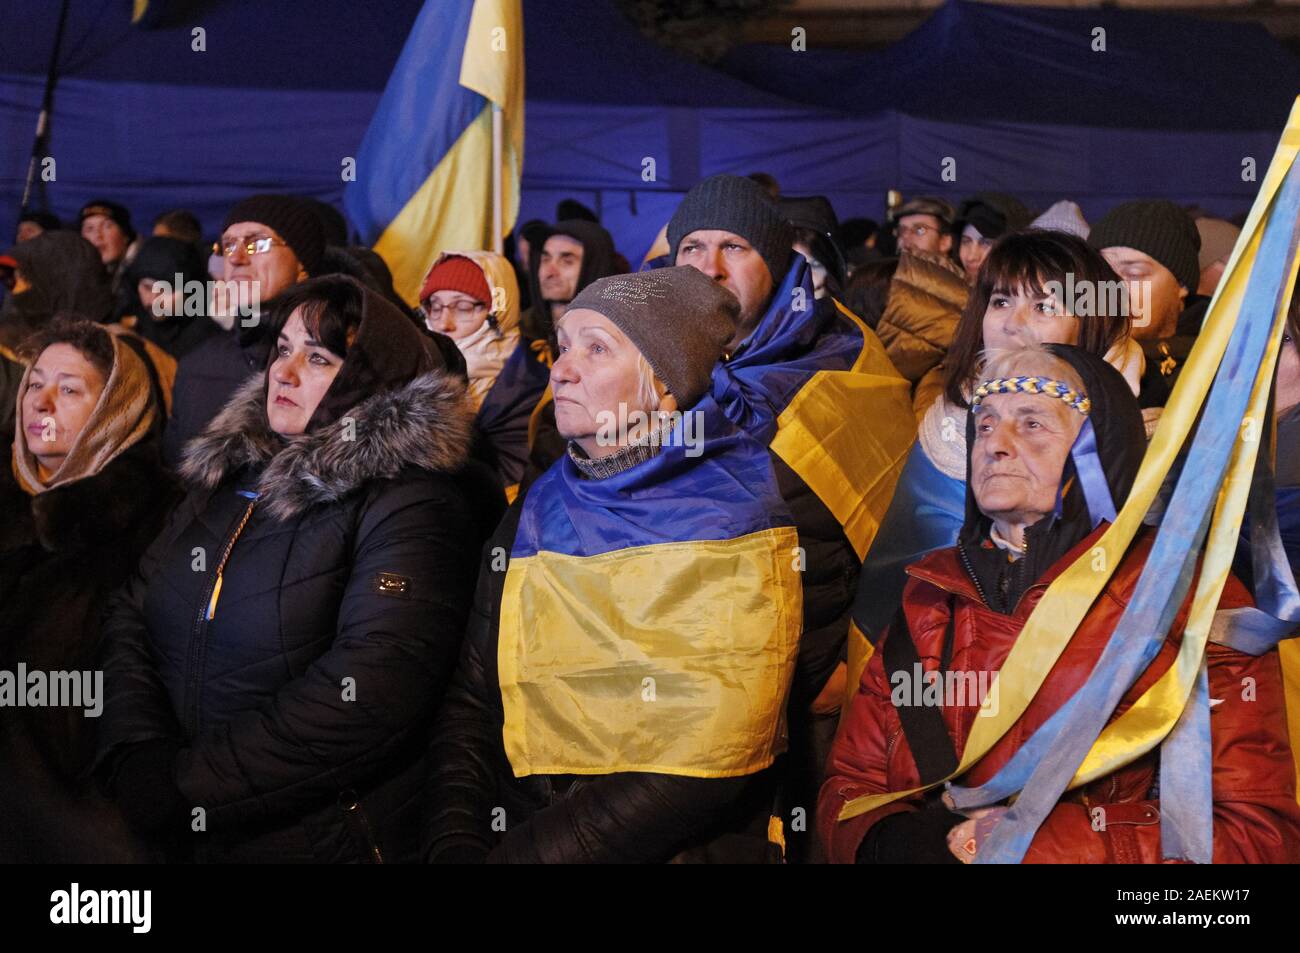 Выезд граждан украины